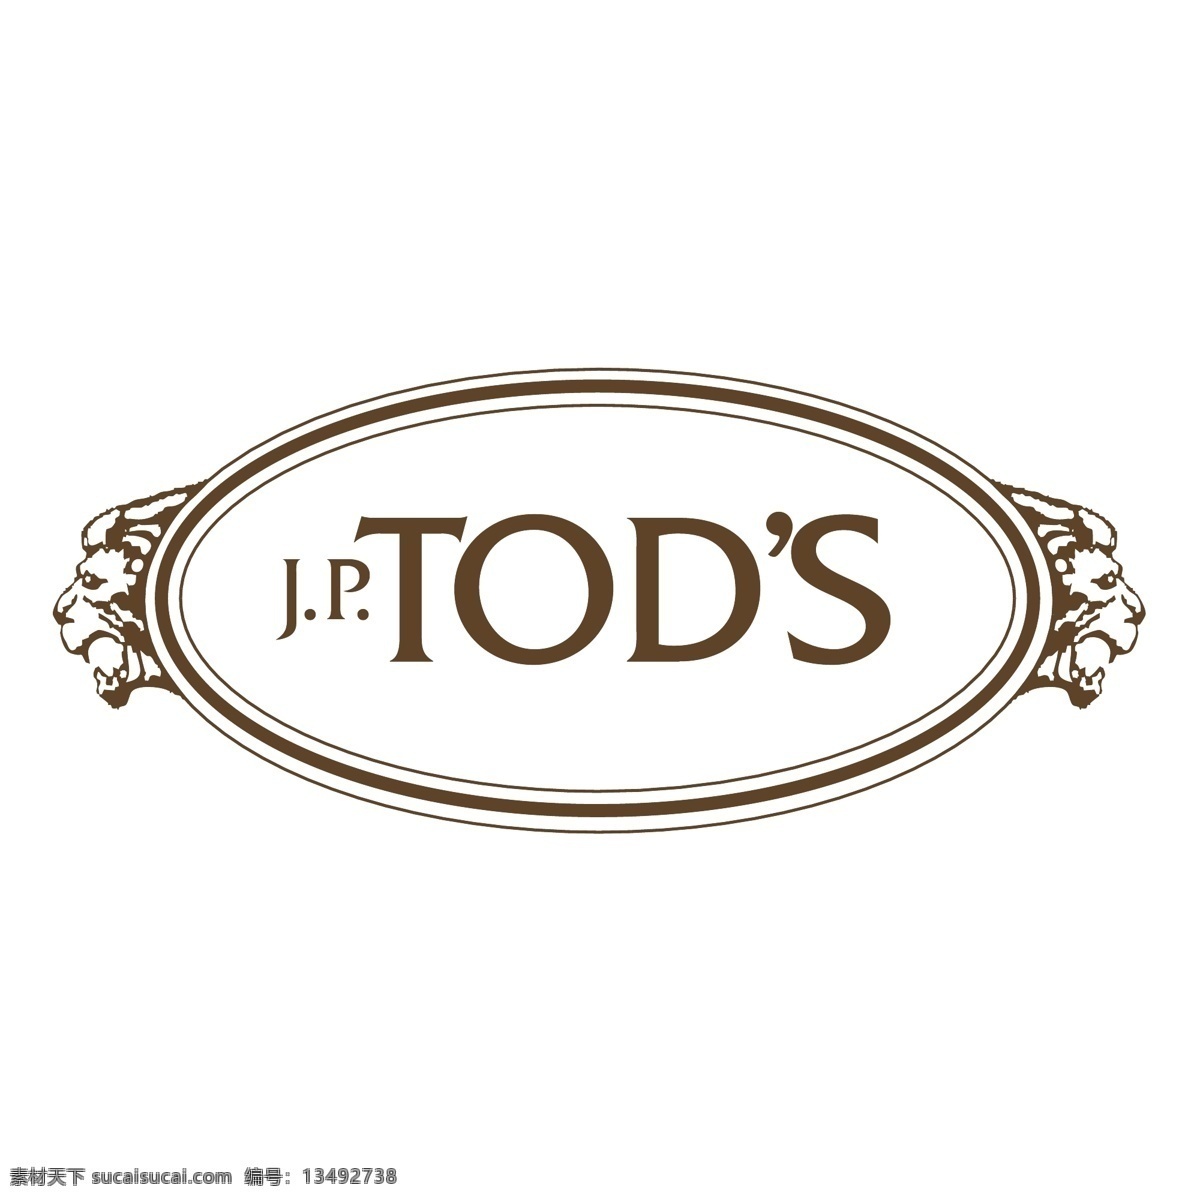 tod 39 s 托 德斯 矢量 logo 托德斯 奢侈品 企业logo 企业 标志 标识标志图标